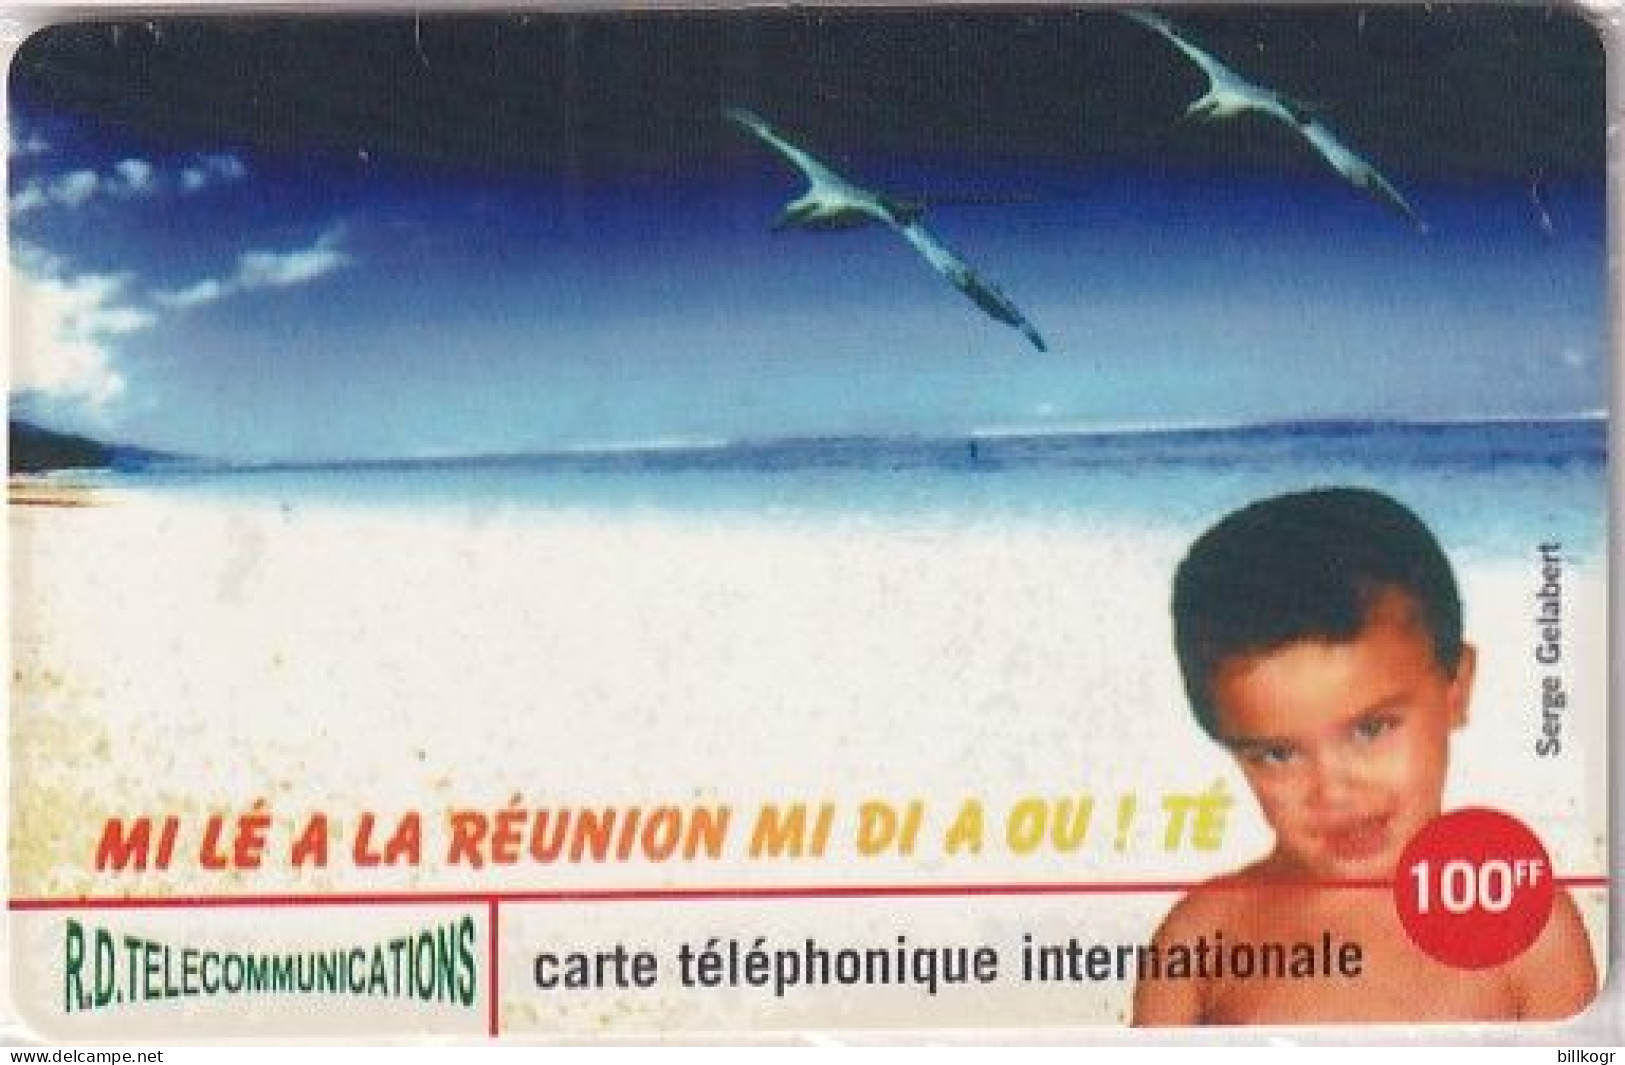 REUNION - Child Of Reunion, R.D. Prepaid Card 100 FF, Tirage 1000, Mint - Reunion